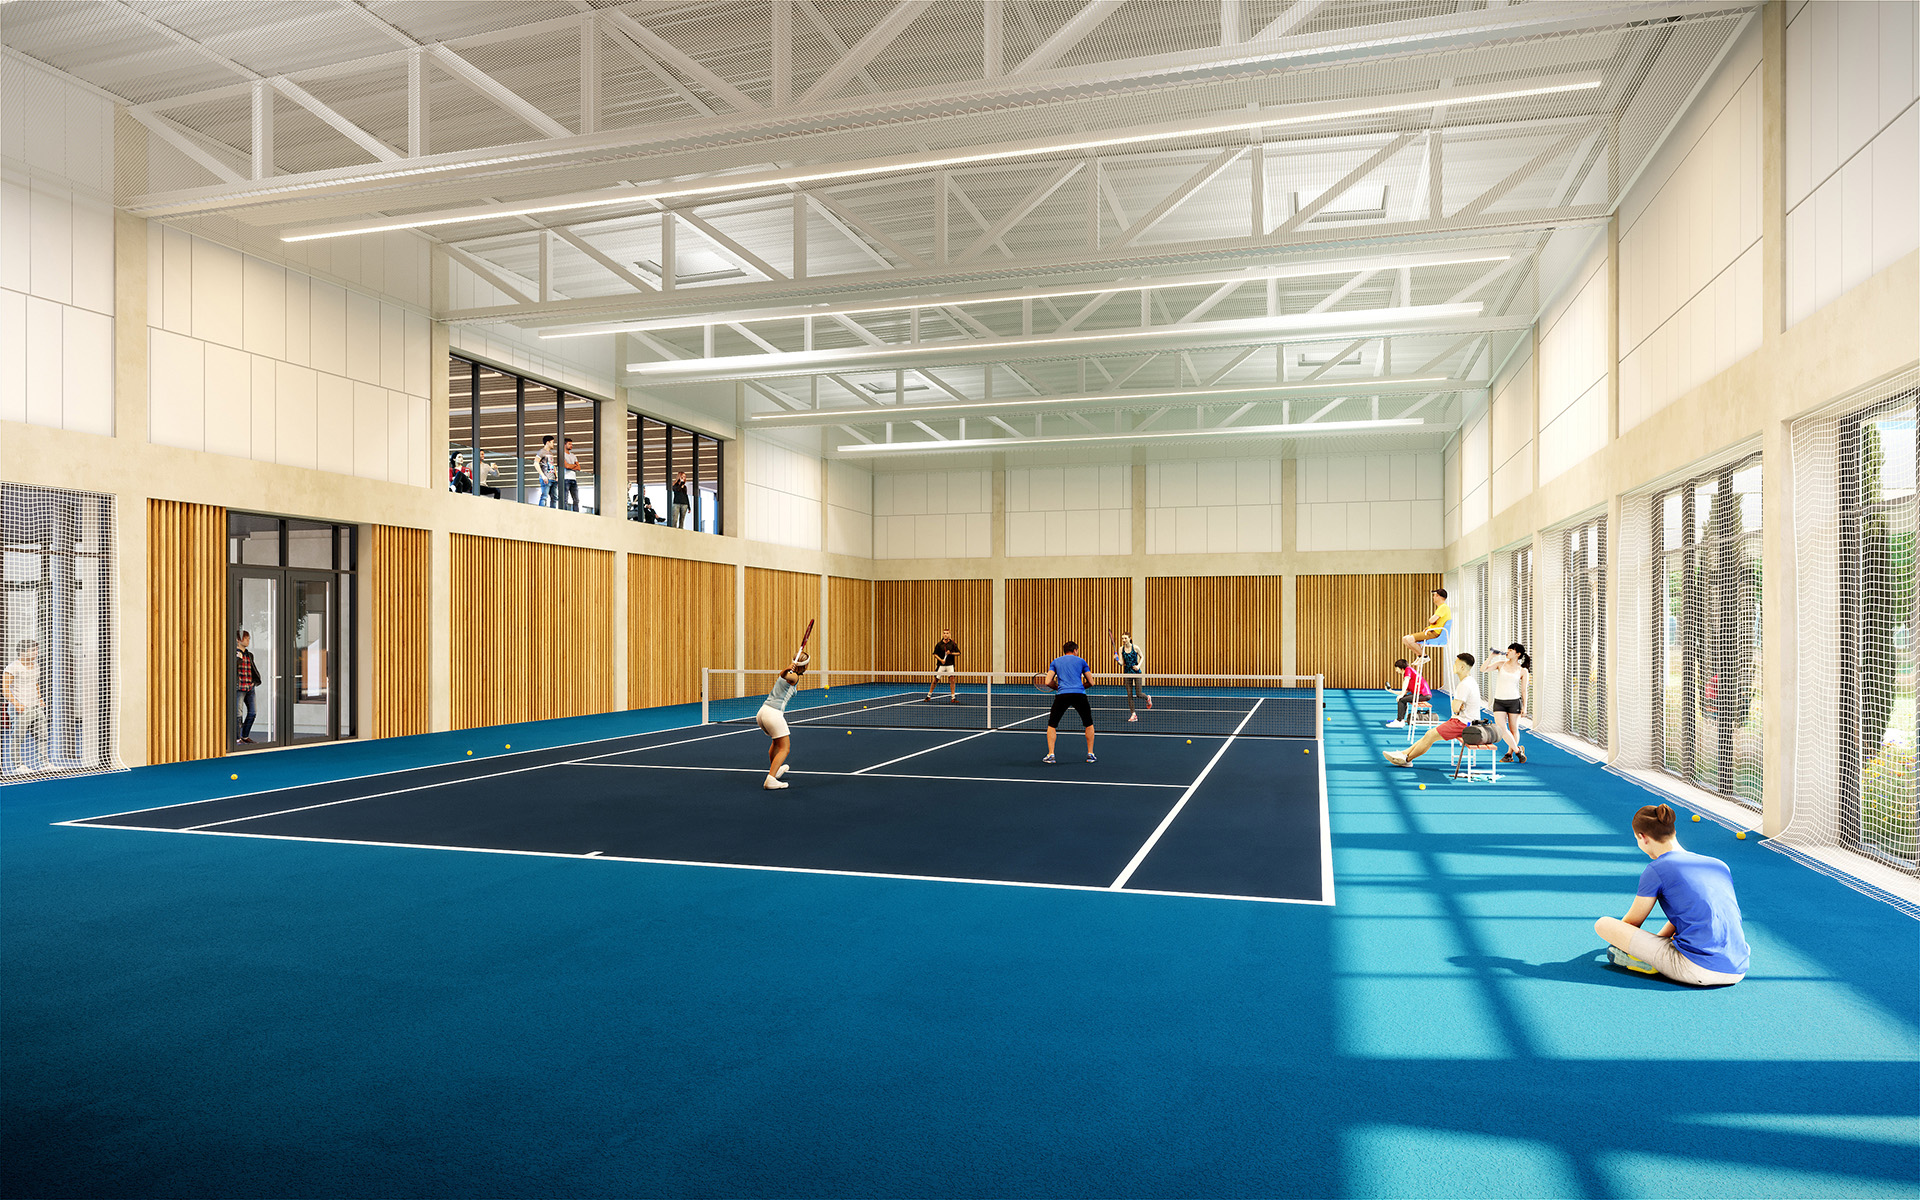 3D representation of an indoor tennis court